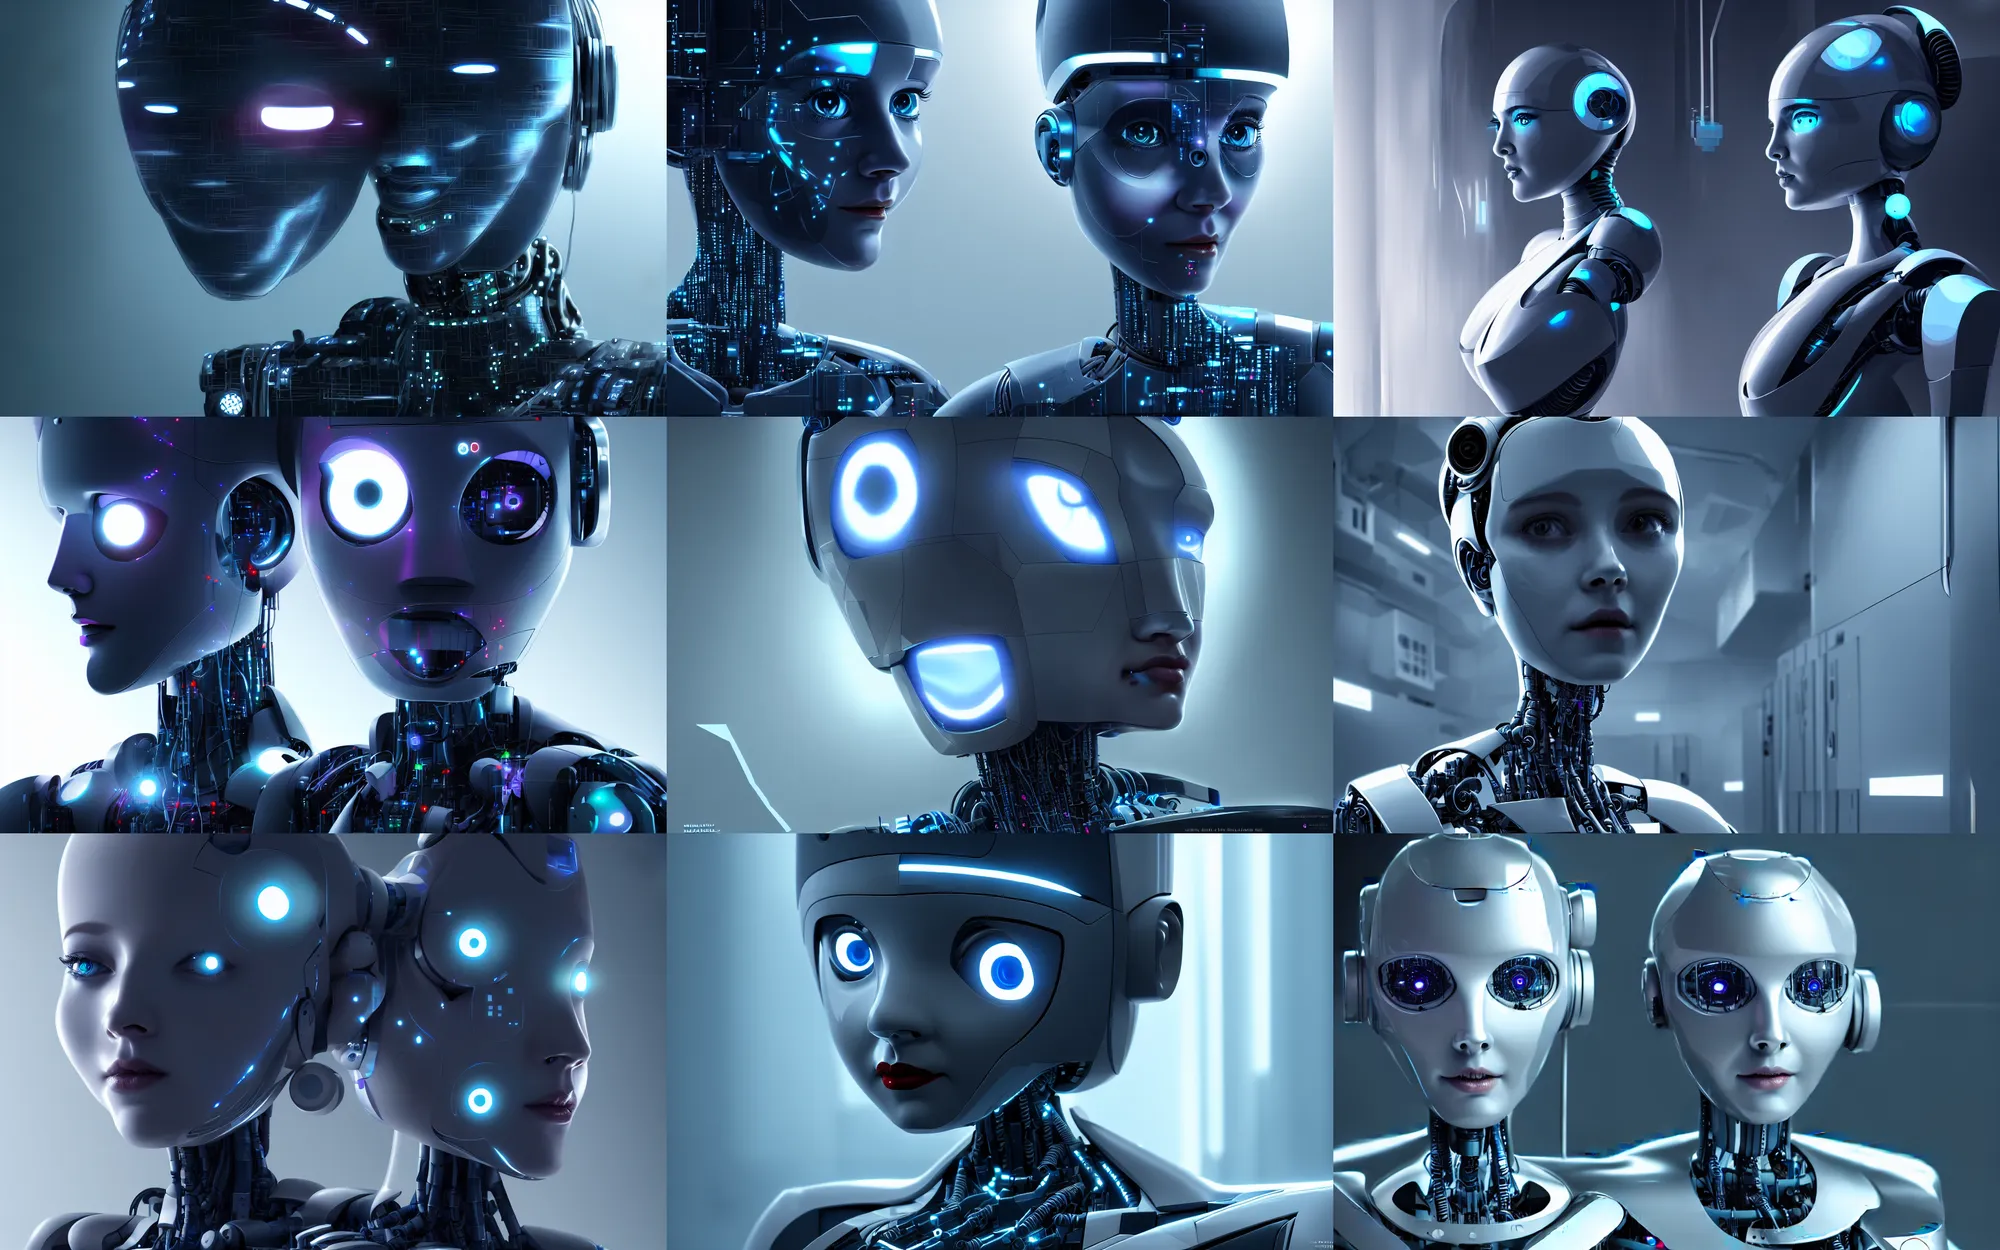 Prompt: portrait vallie robot from movie in a data center room, concept art, cyberpunk, high detail, 4 k